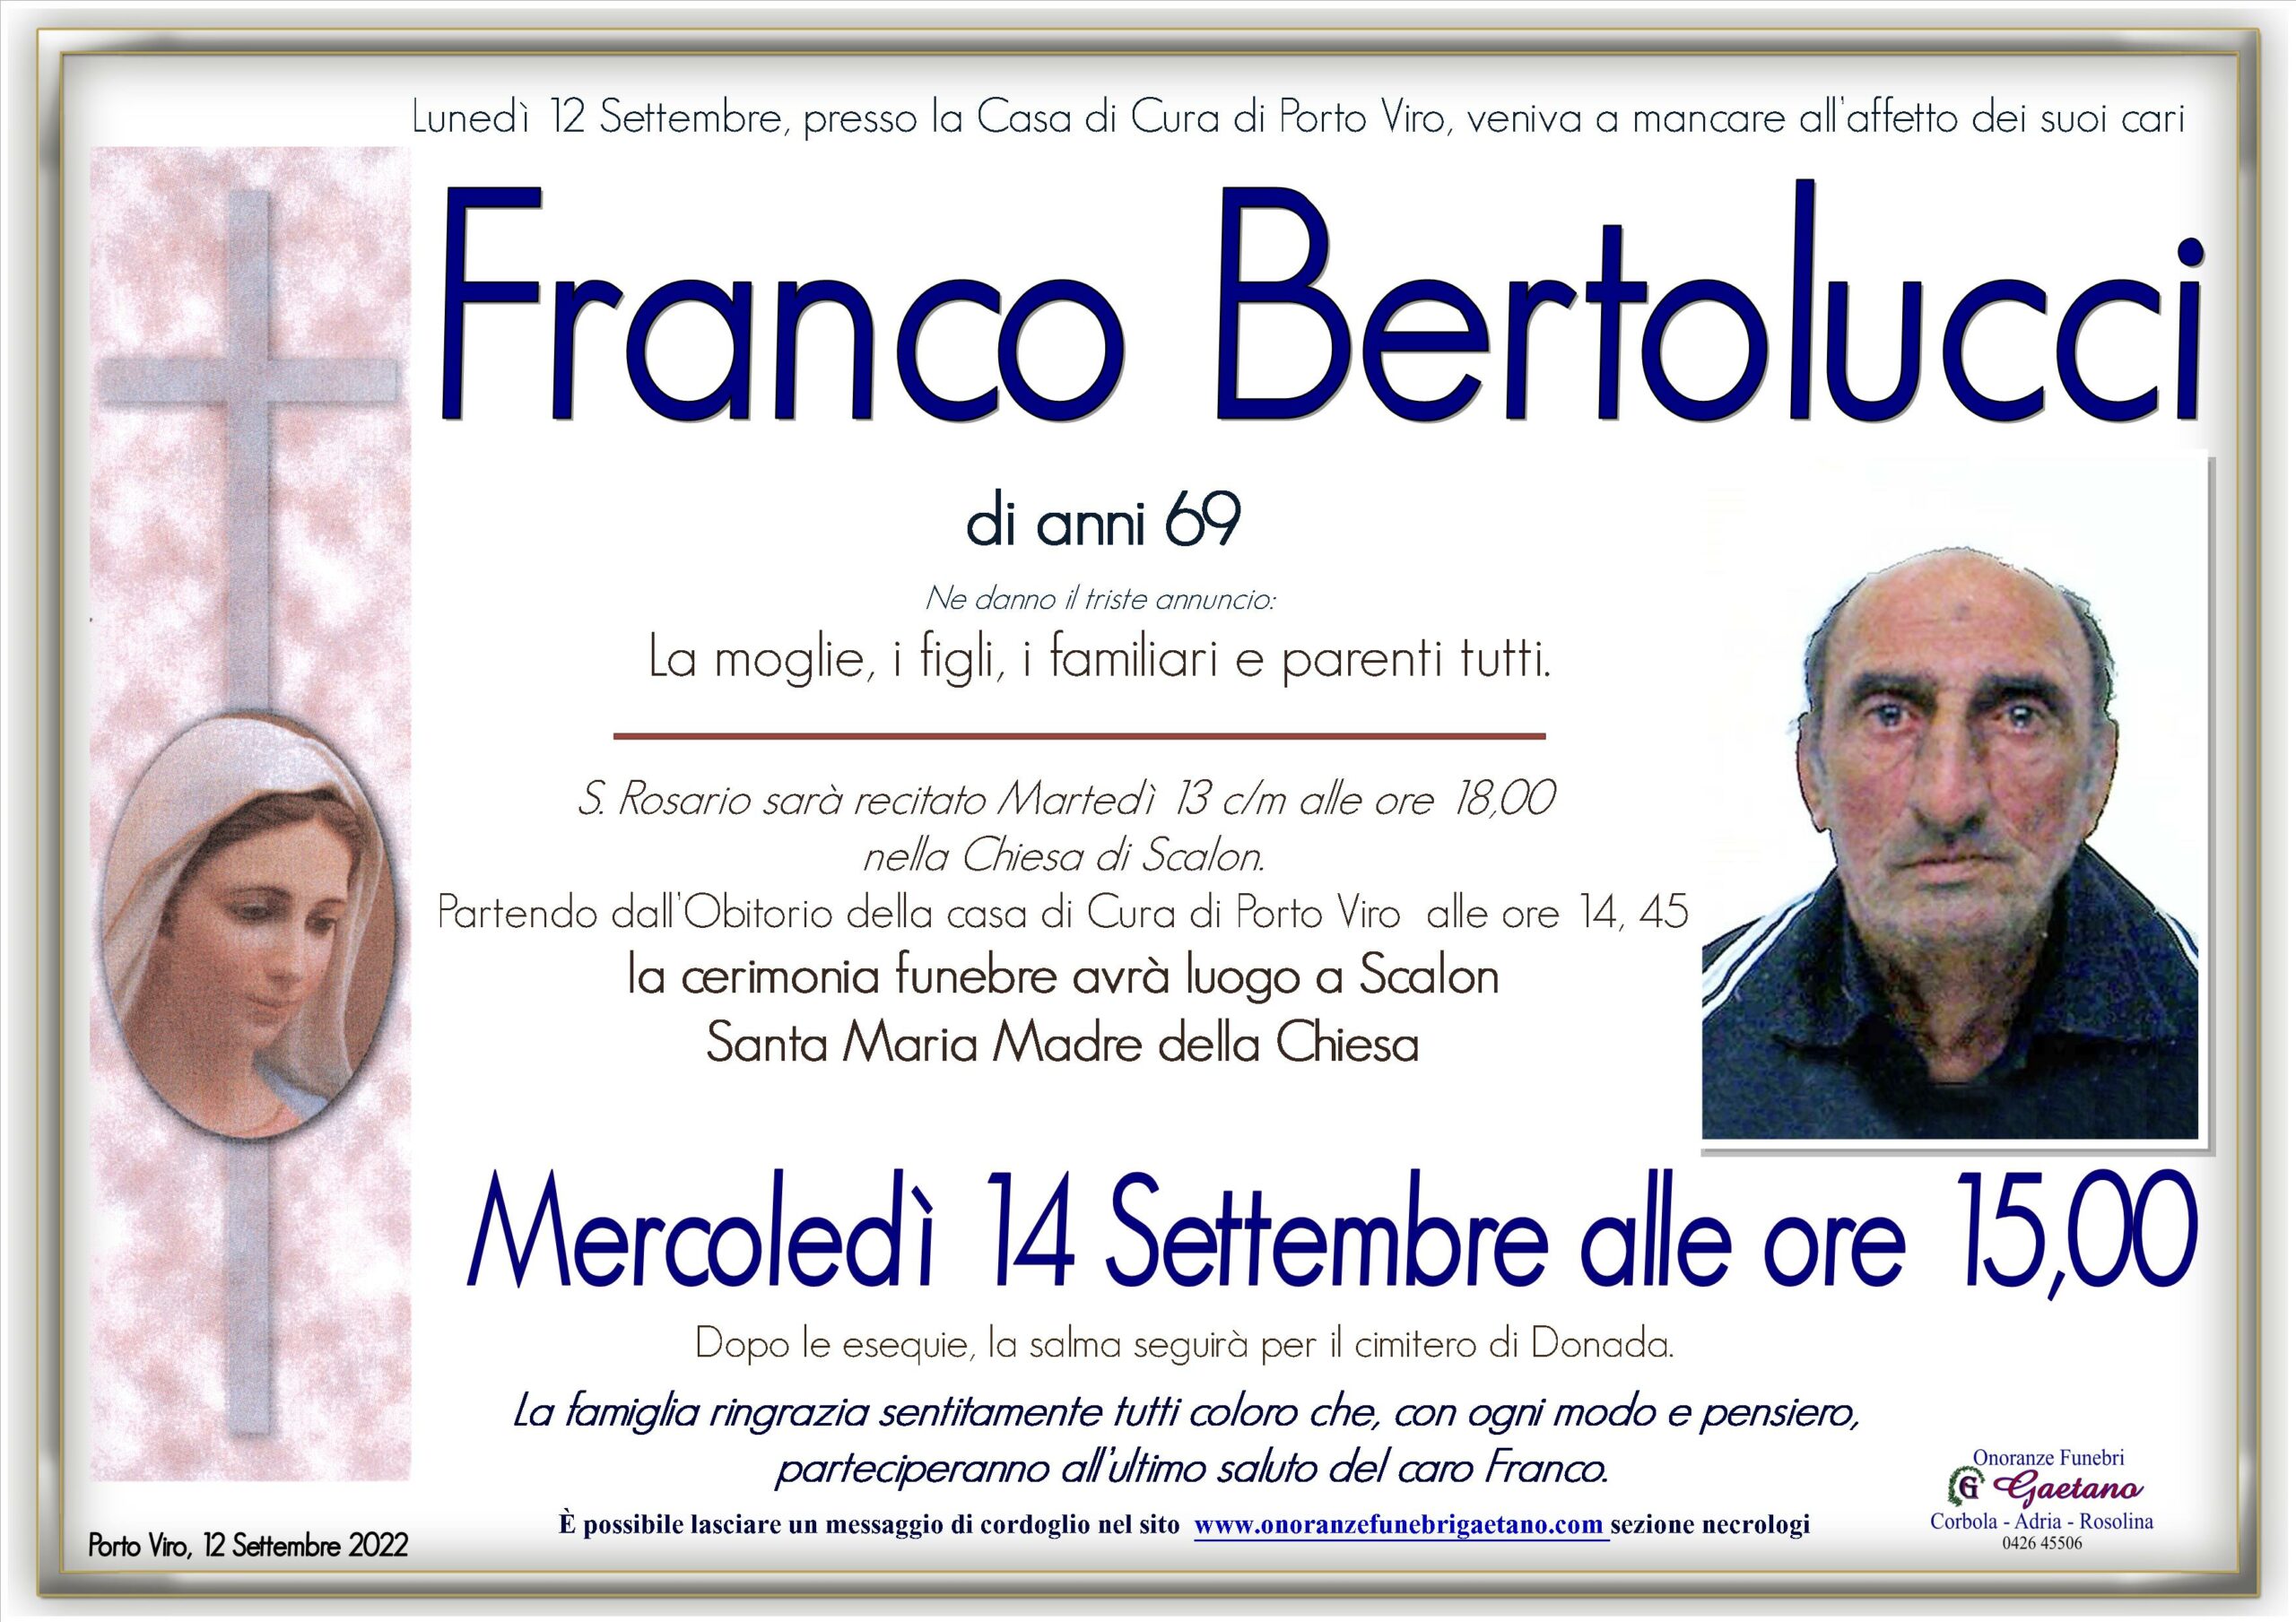 Franco Bertolucci